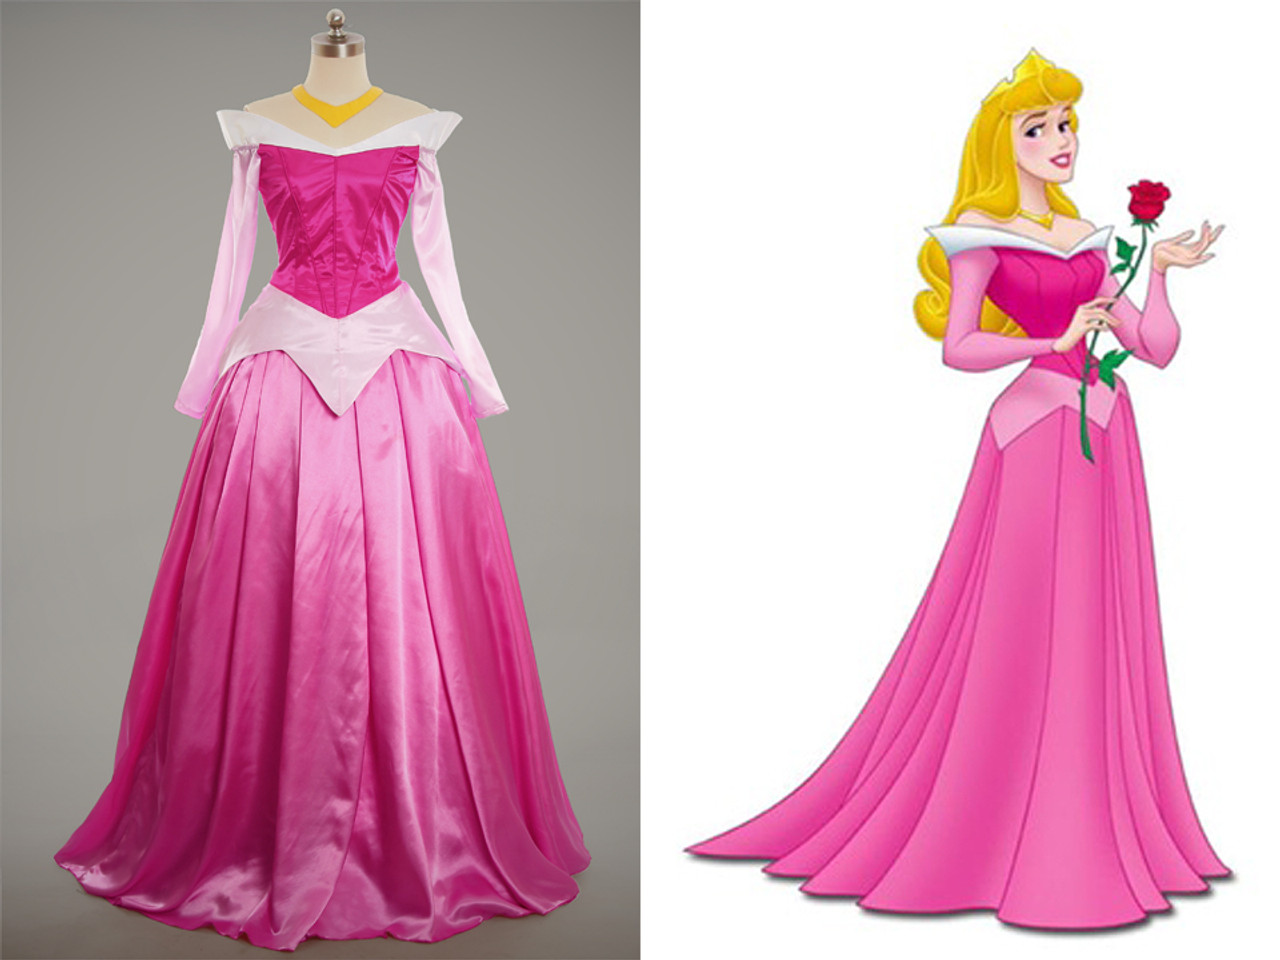  Fun Costumes Women's Disney Sleeping Beauty Dress, Princess  Aurora Pink Gown